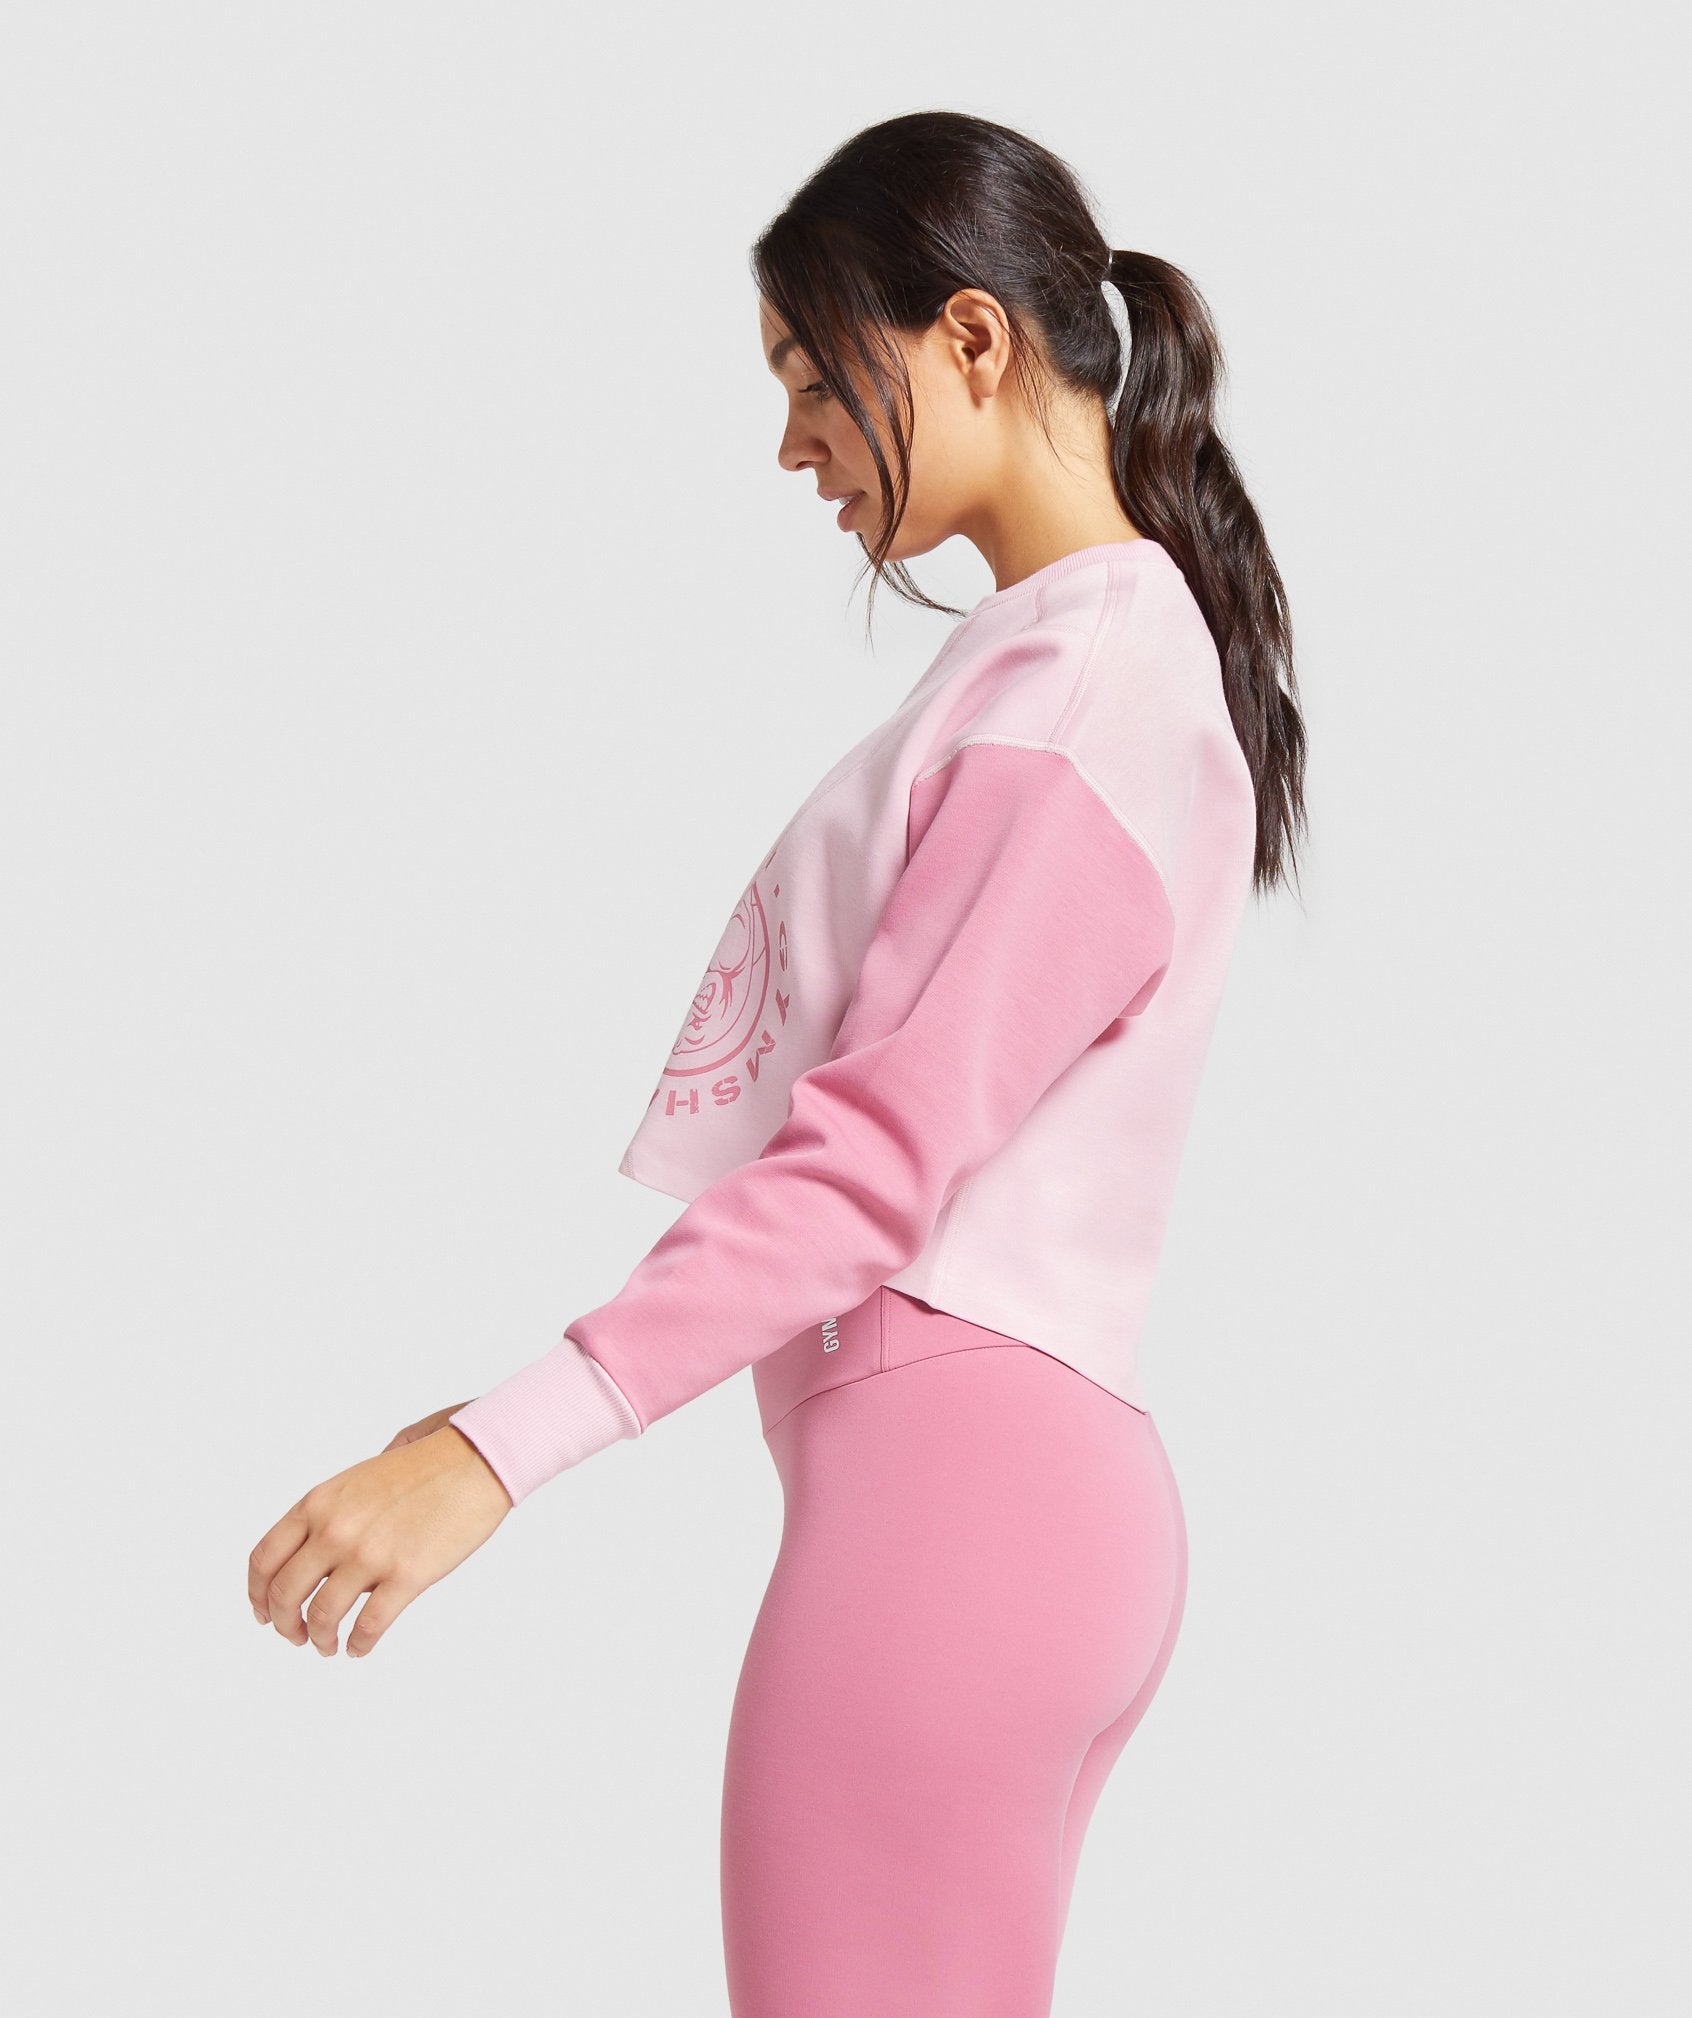 Rewind Sweater in Pink - view 3